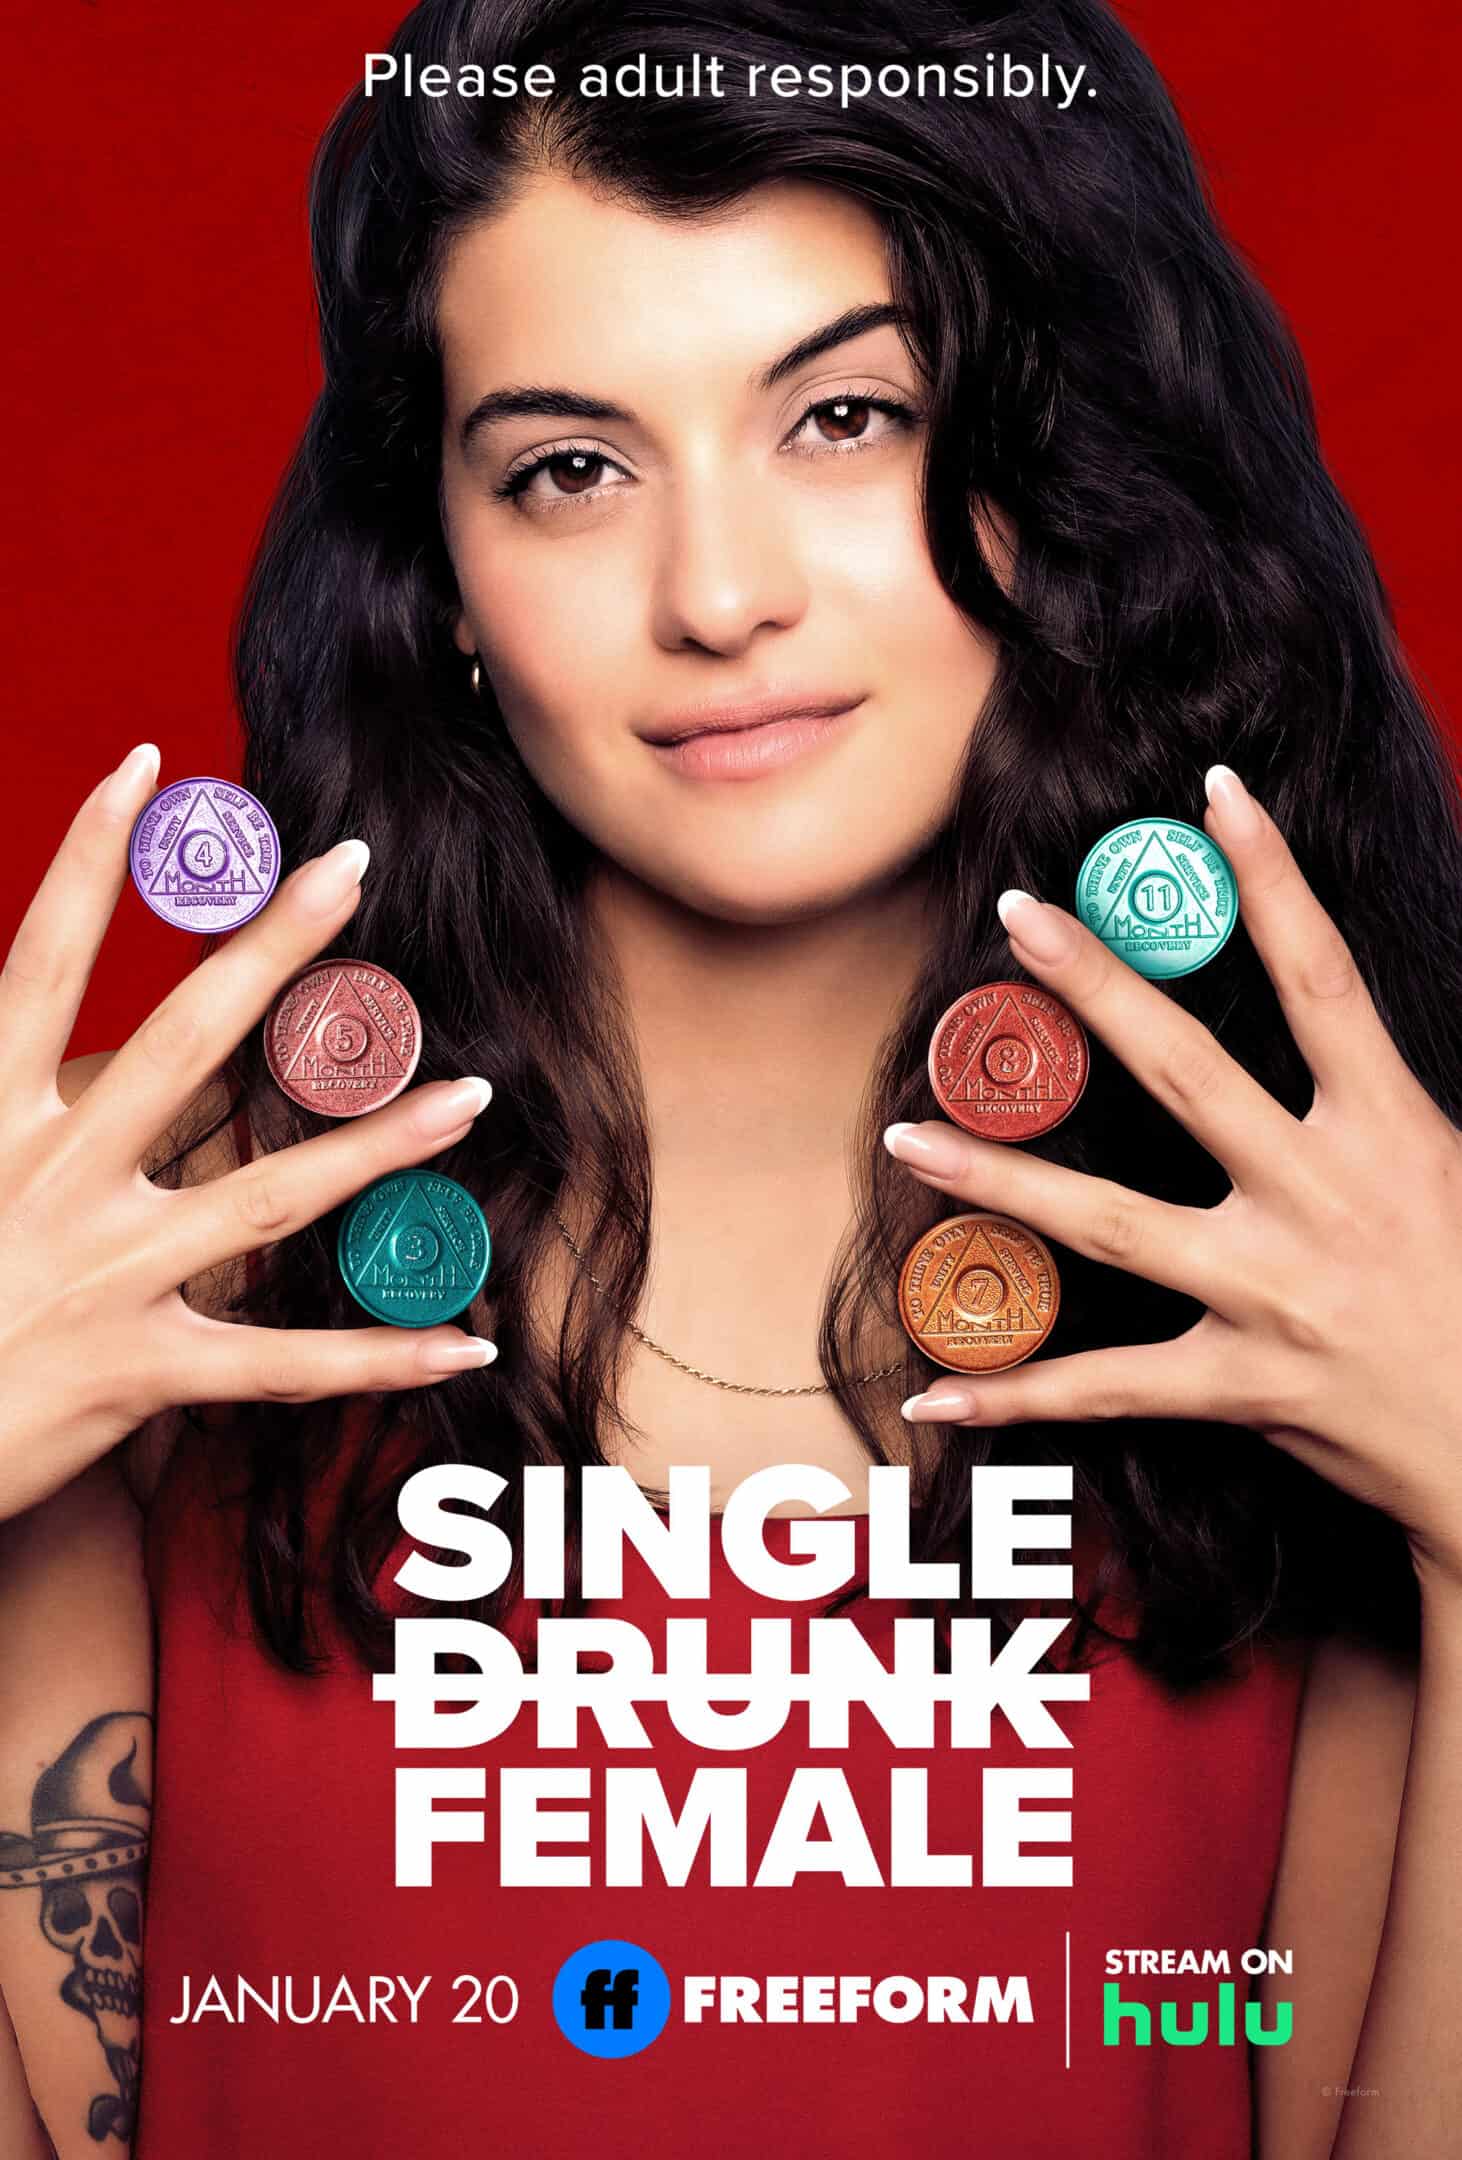 Single Drunk Female Promotional Poster